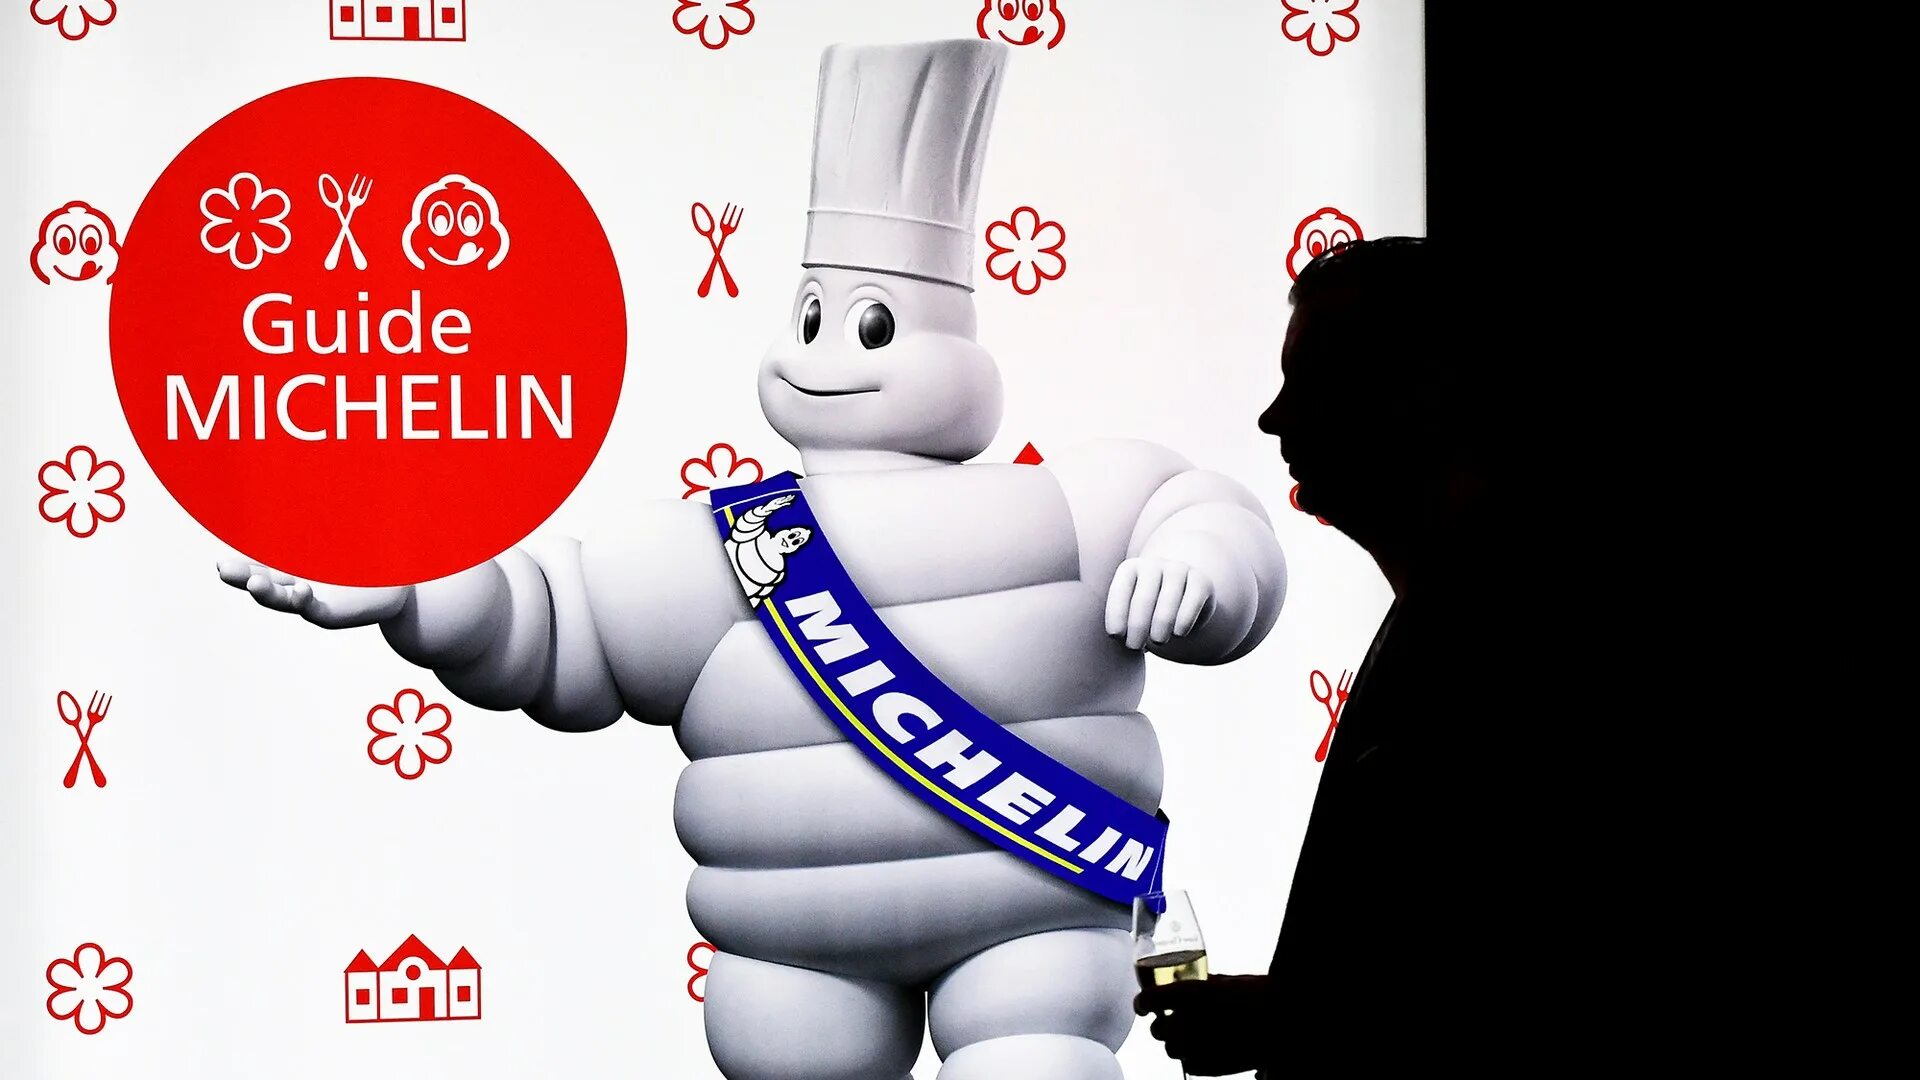 Первая звезда мишлен. Звезда Мишлен. Табличка Мишлен. Мишлен логотип. Michelin Guide.